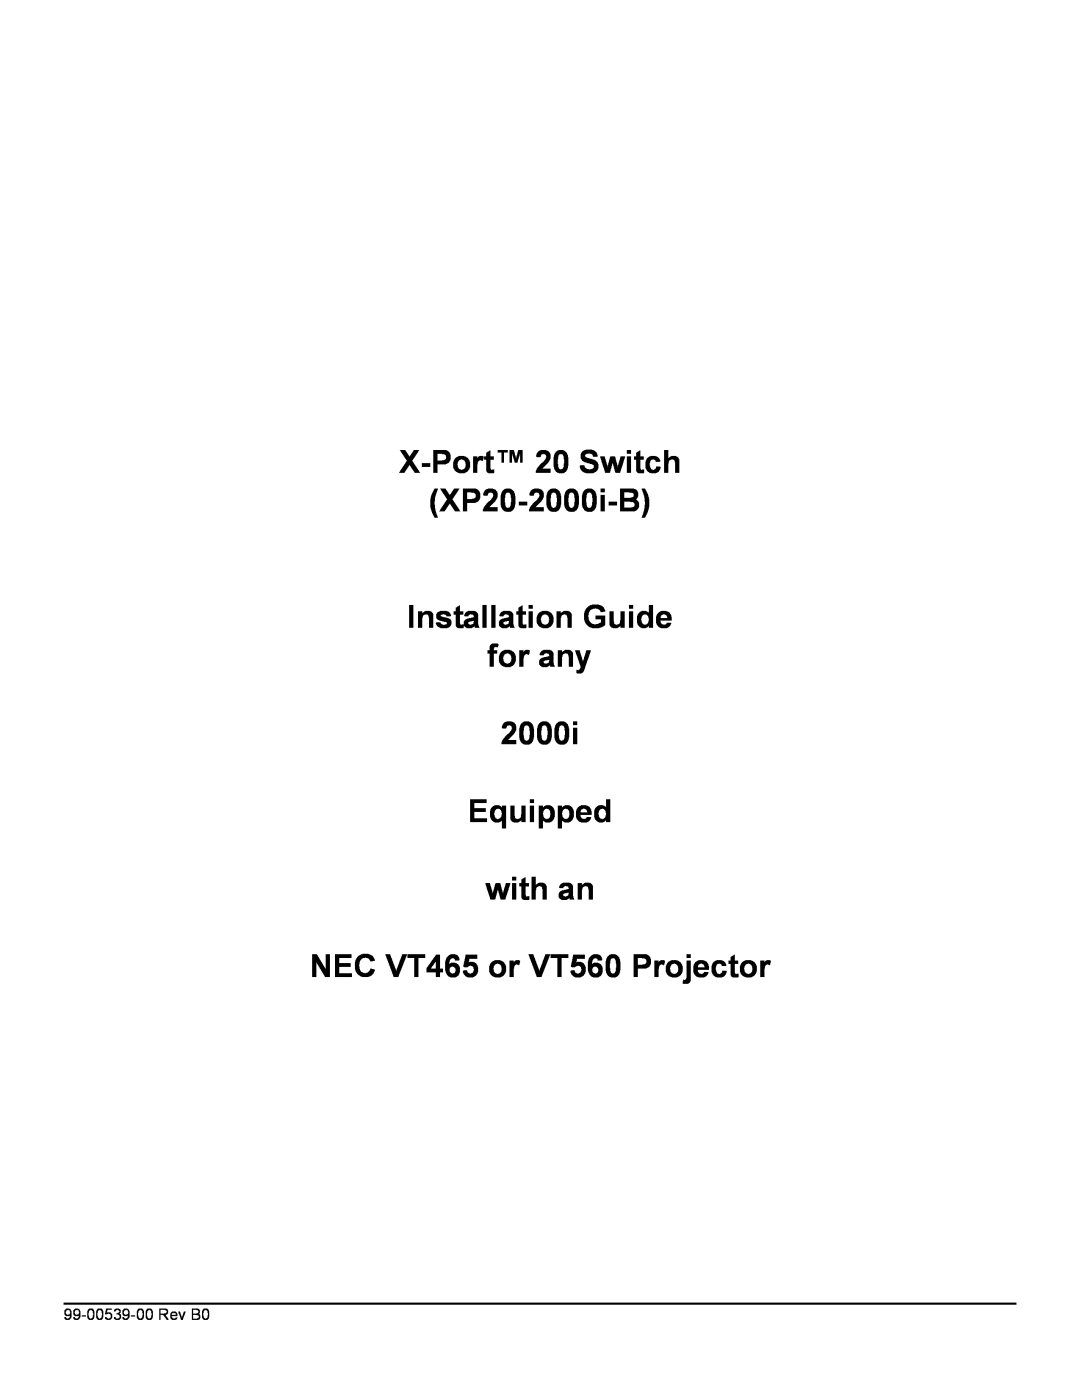 Smart Technologies (XP20-2000i-B) manual X-Port 20 Switch XP20-2000i-B Installation Guide for any, Rev B0 